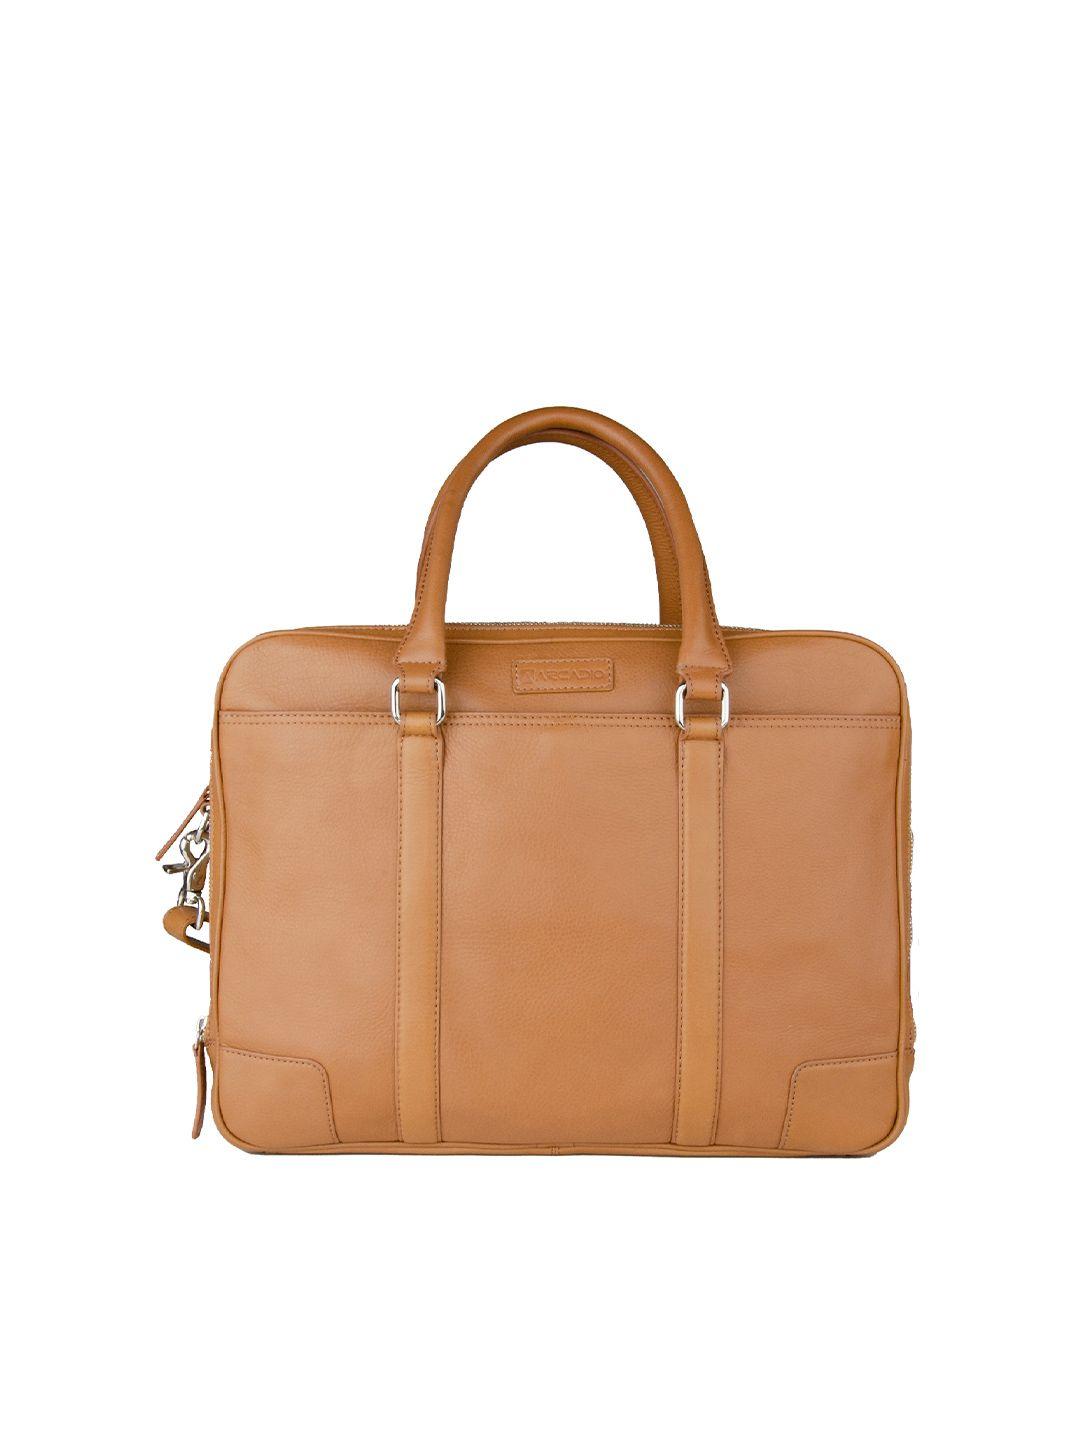 arcadio unisex tan & silver-toned textured leather laptop bag